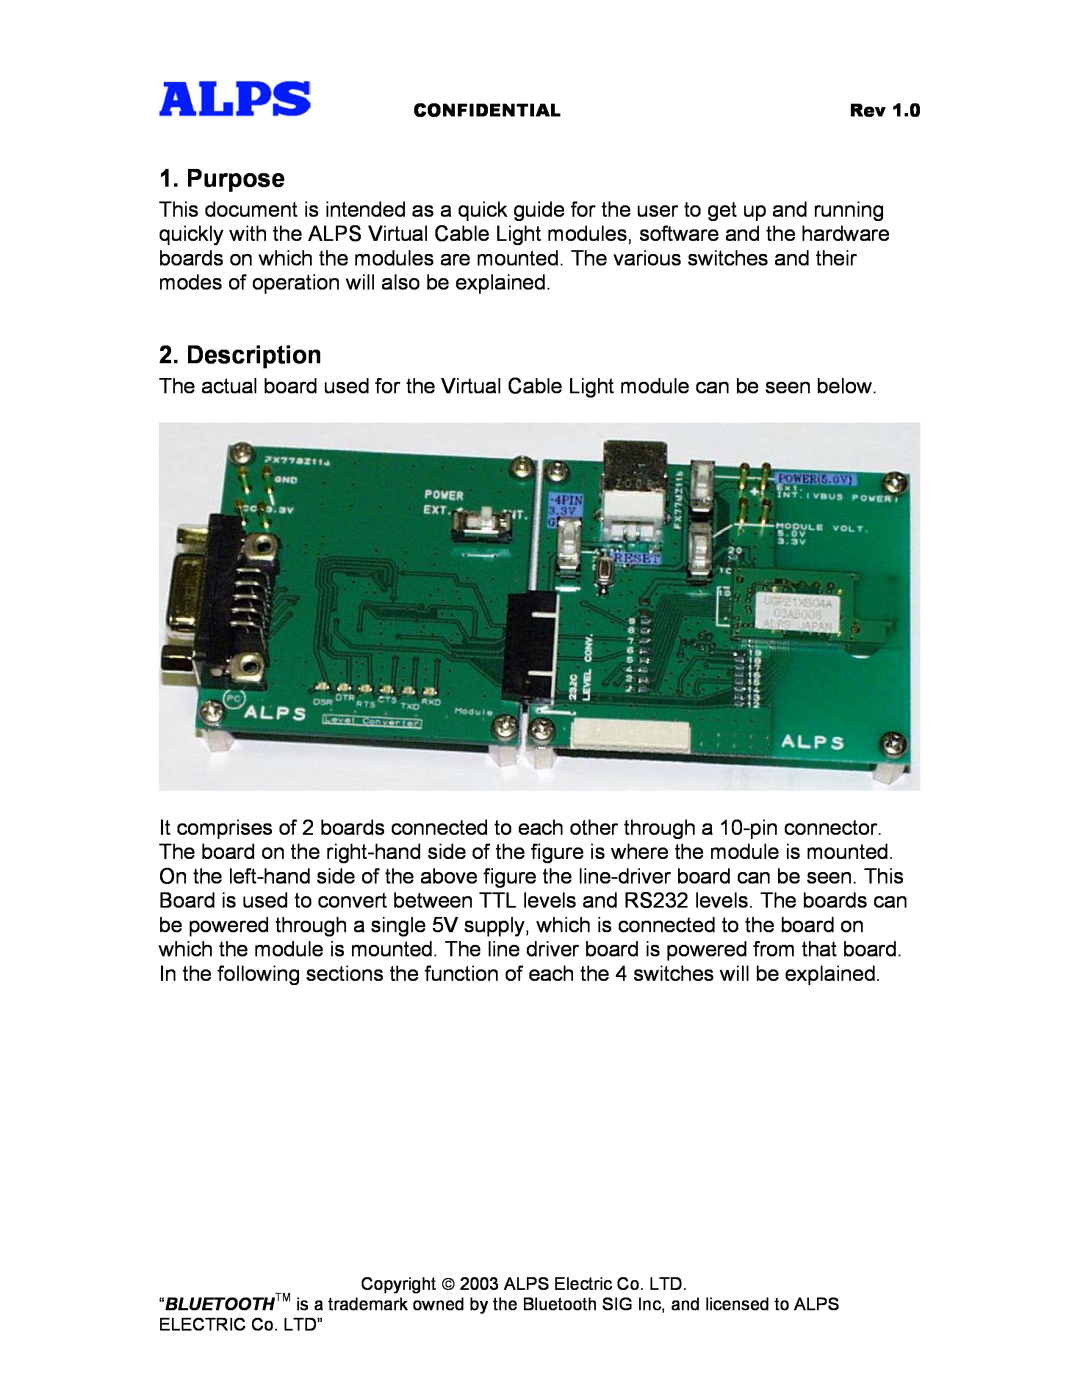 Alps Electric Virtual Cable Light Module manual Purpose, Description 